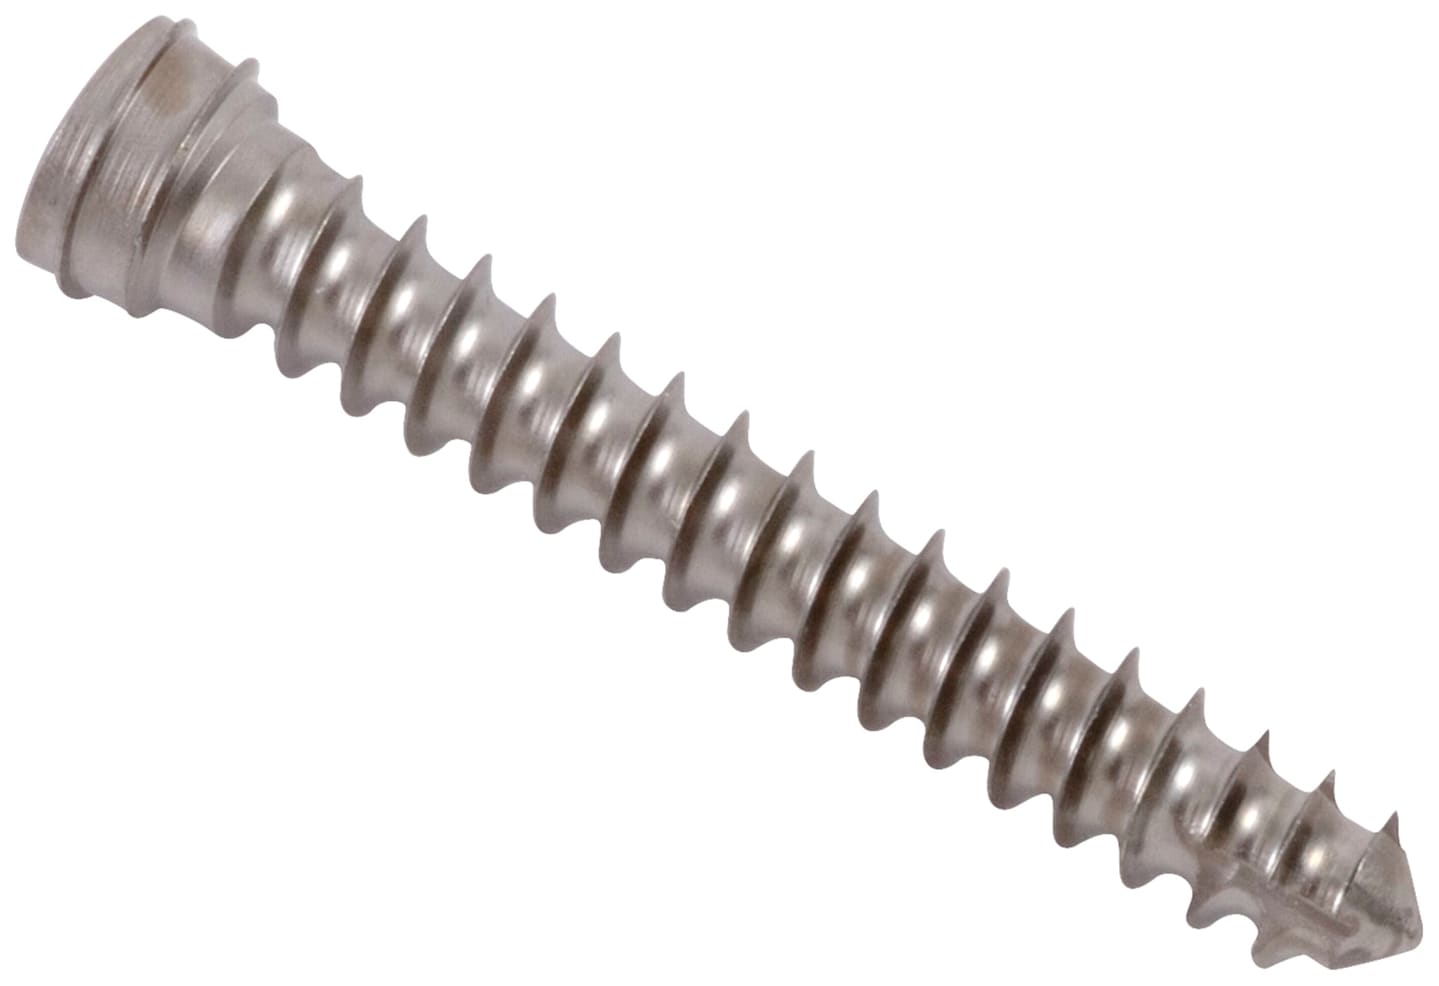 Cortical Locking Screw, 3.5 mm x 26 mm